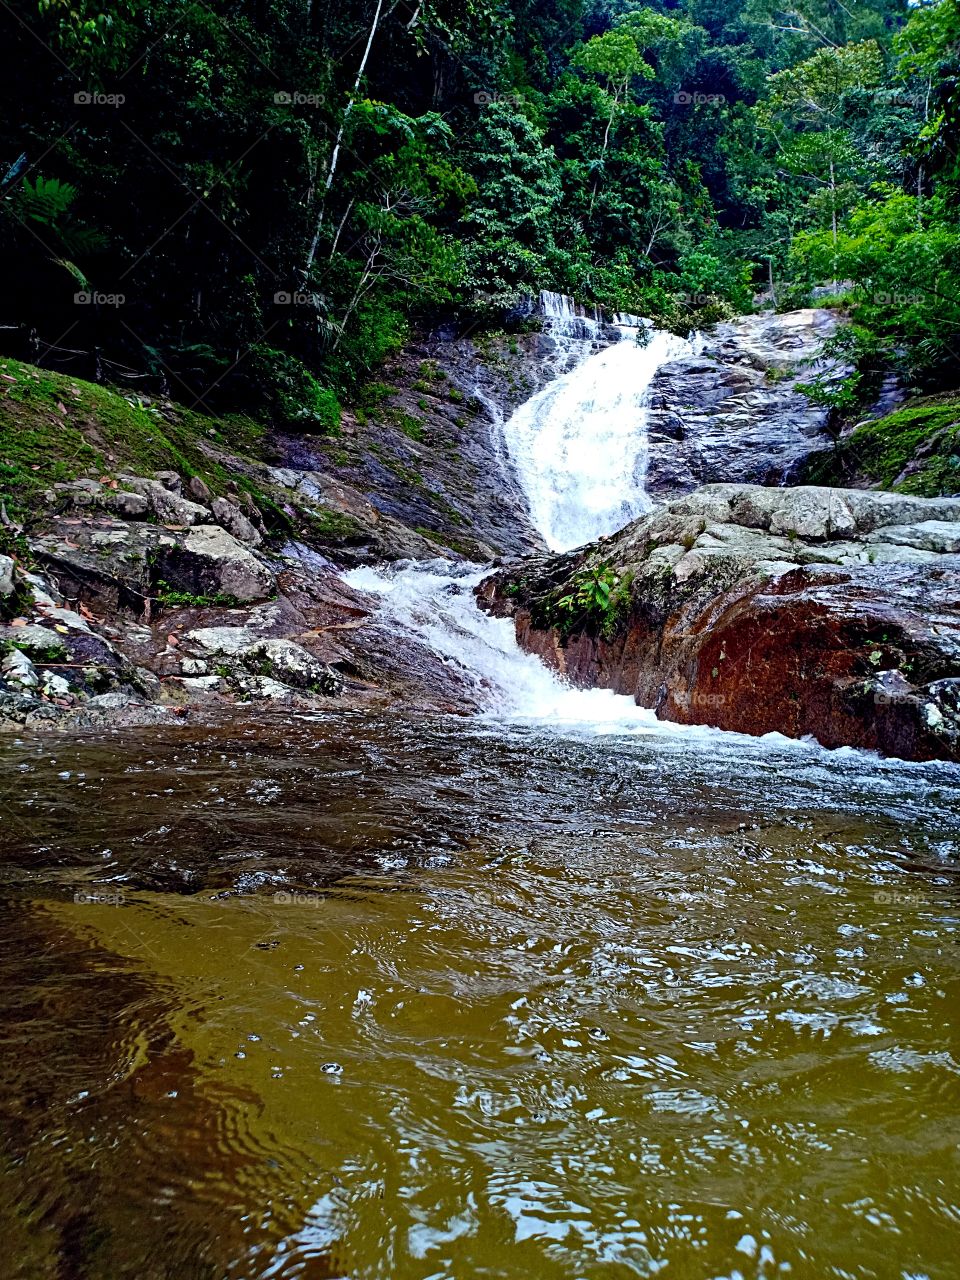 😘😍 Lata Iskandar waterfall..